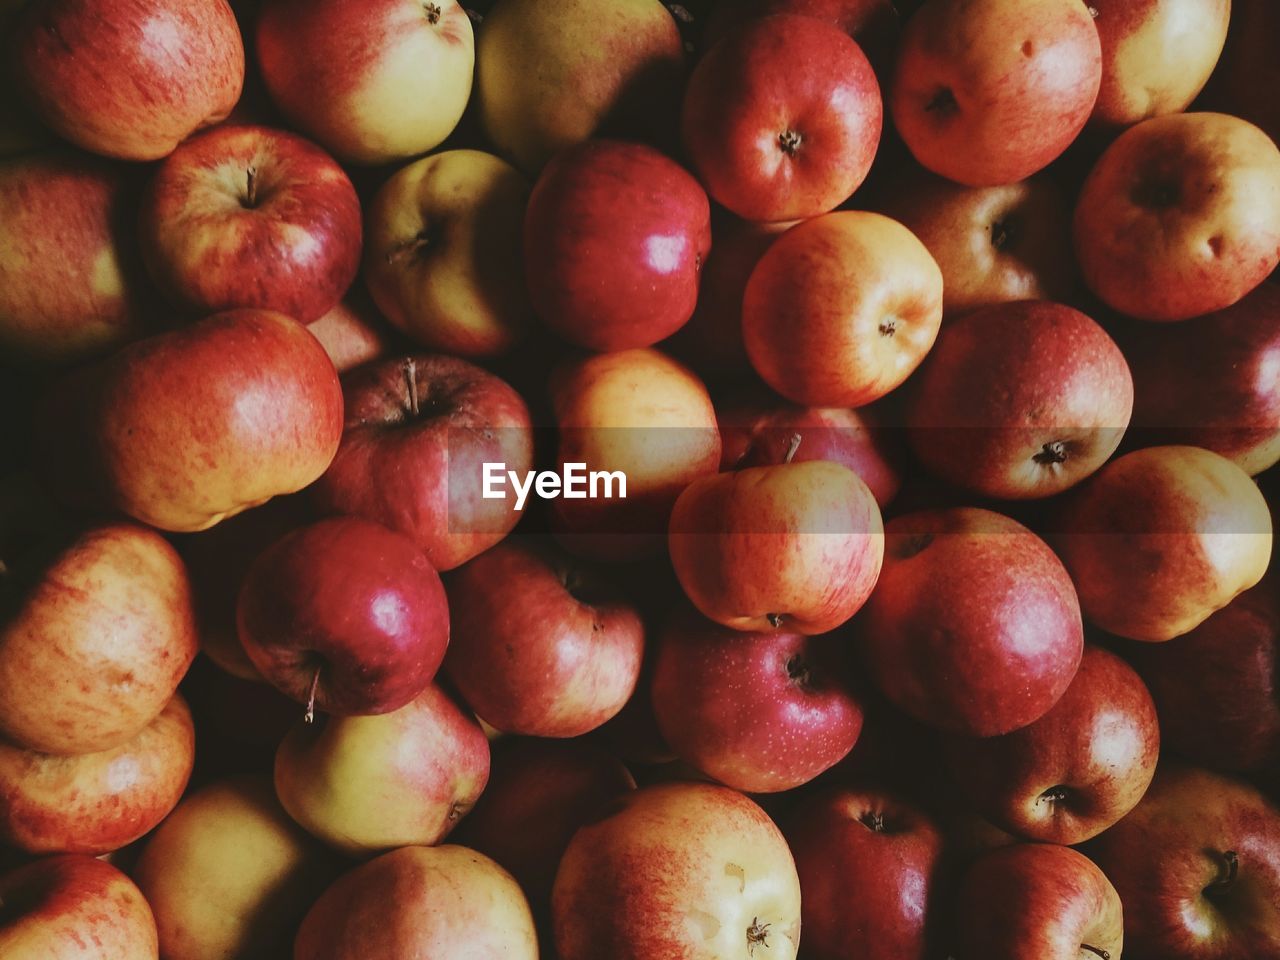 Detail shot of apples